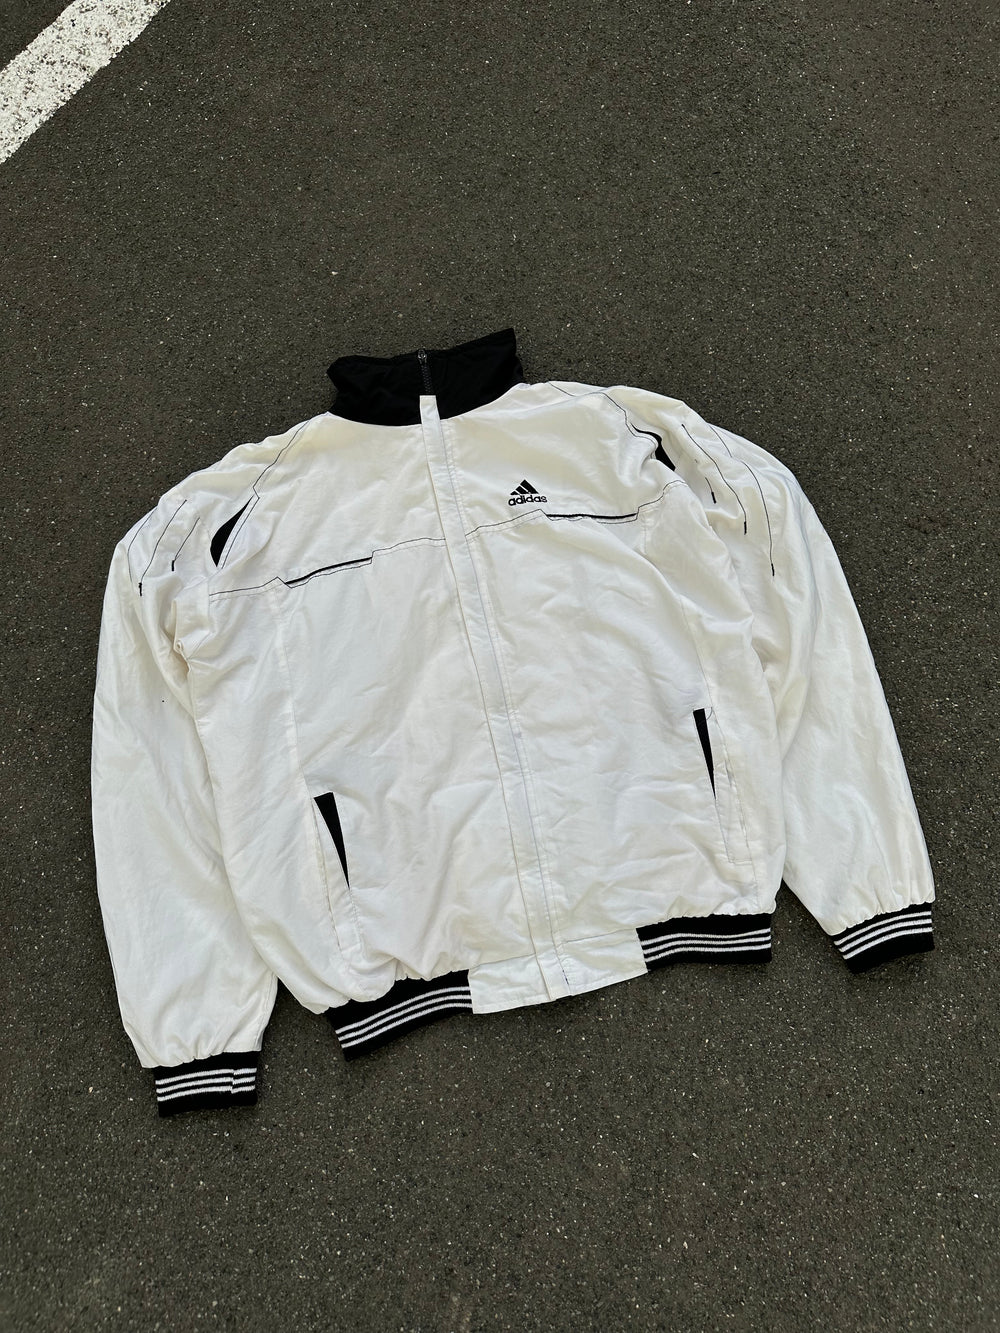 Early 2000s Adidas Light Track Jacket (XL)